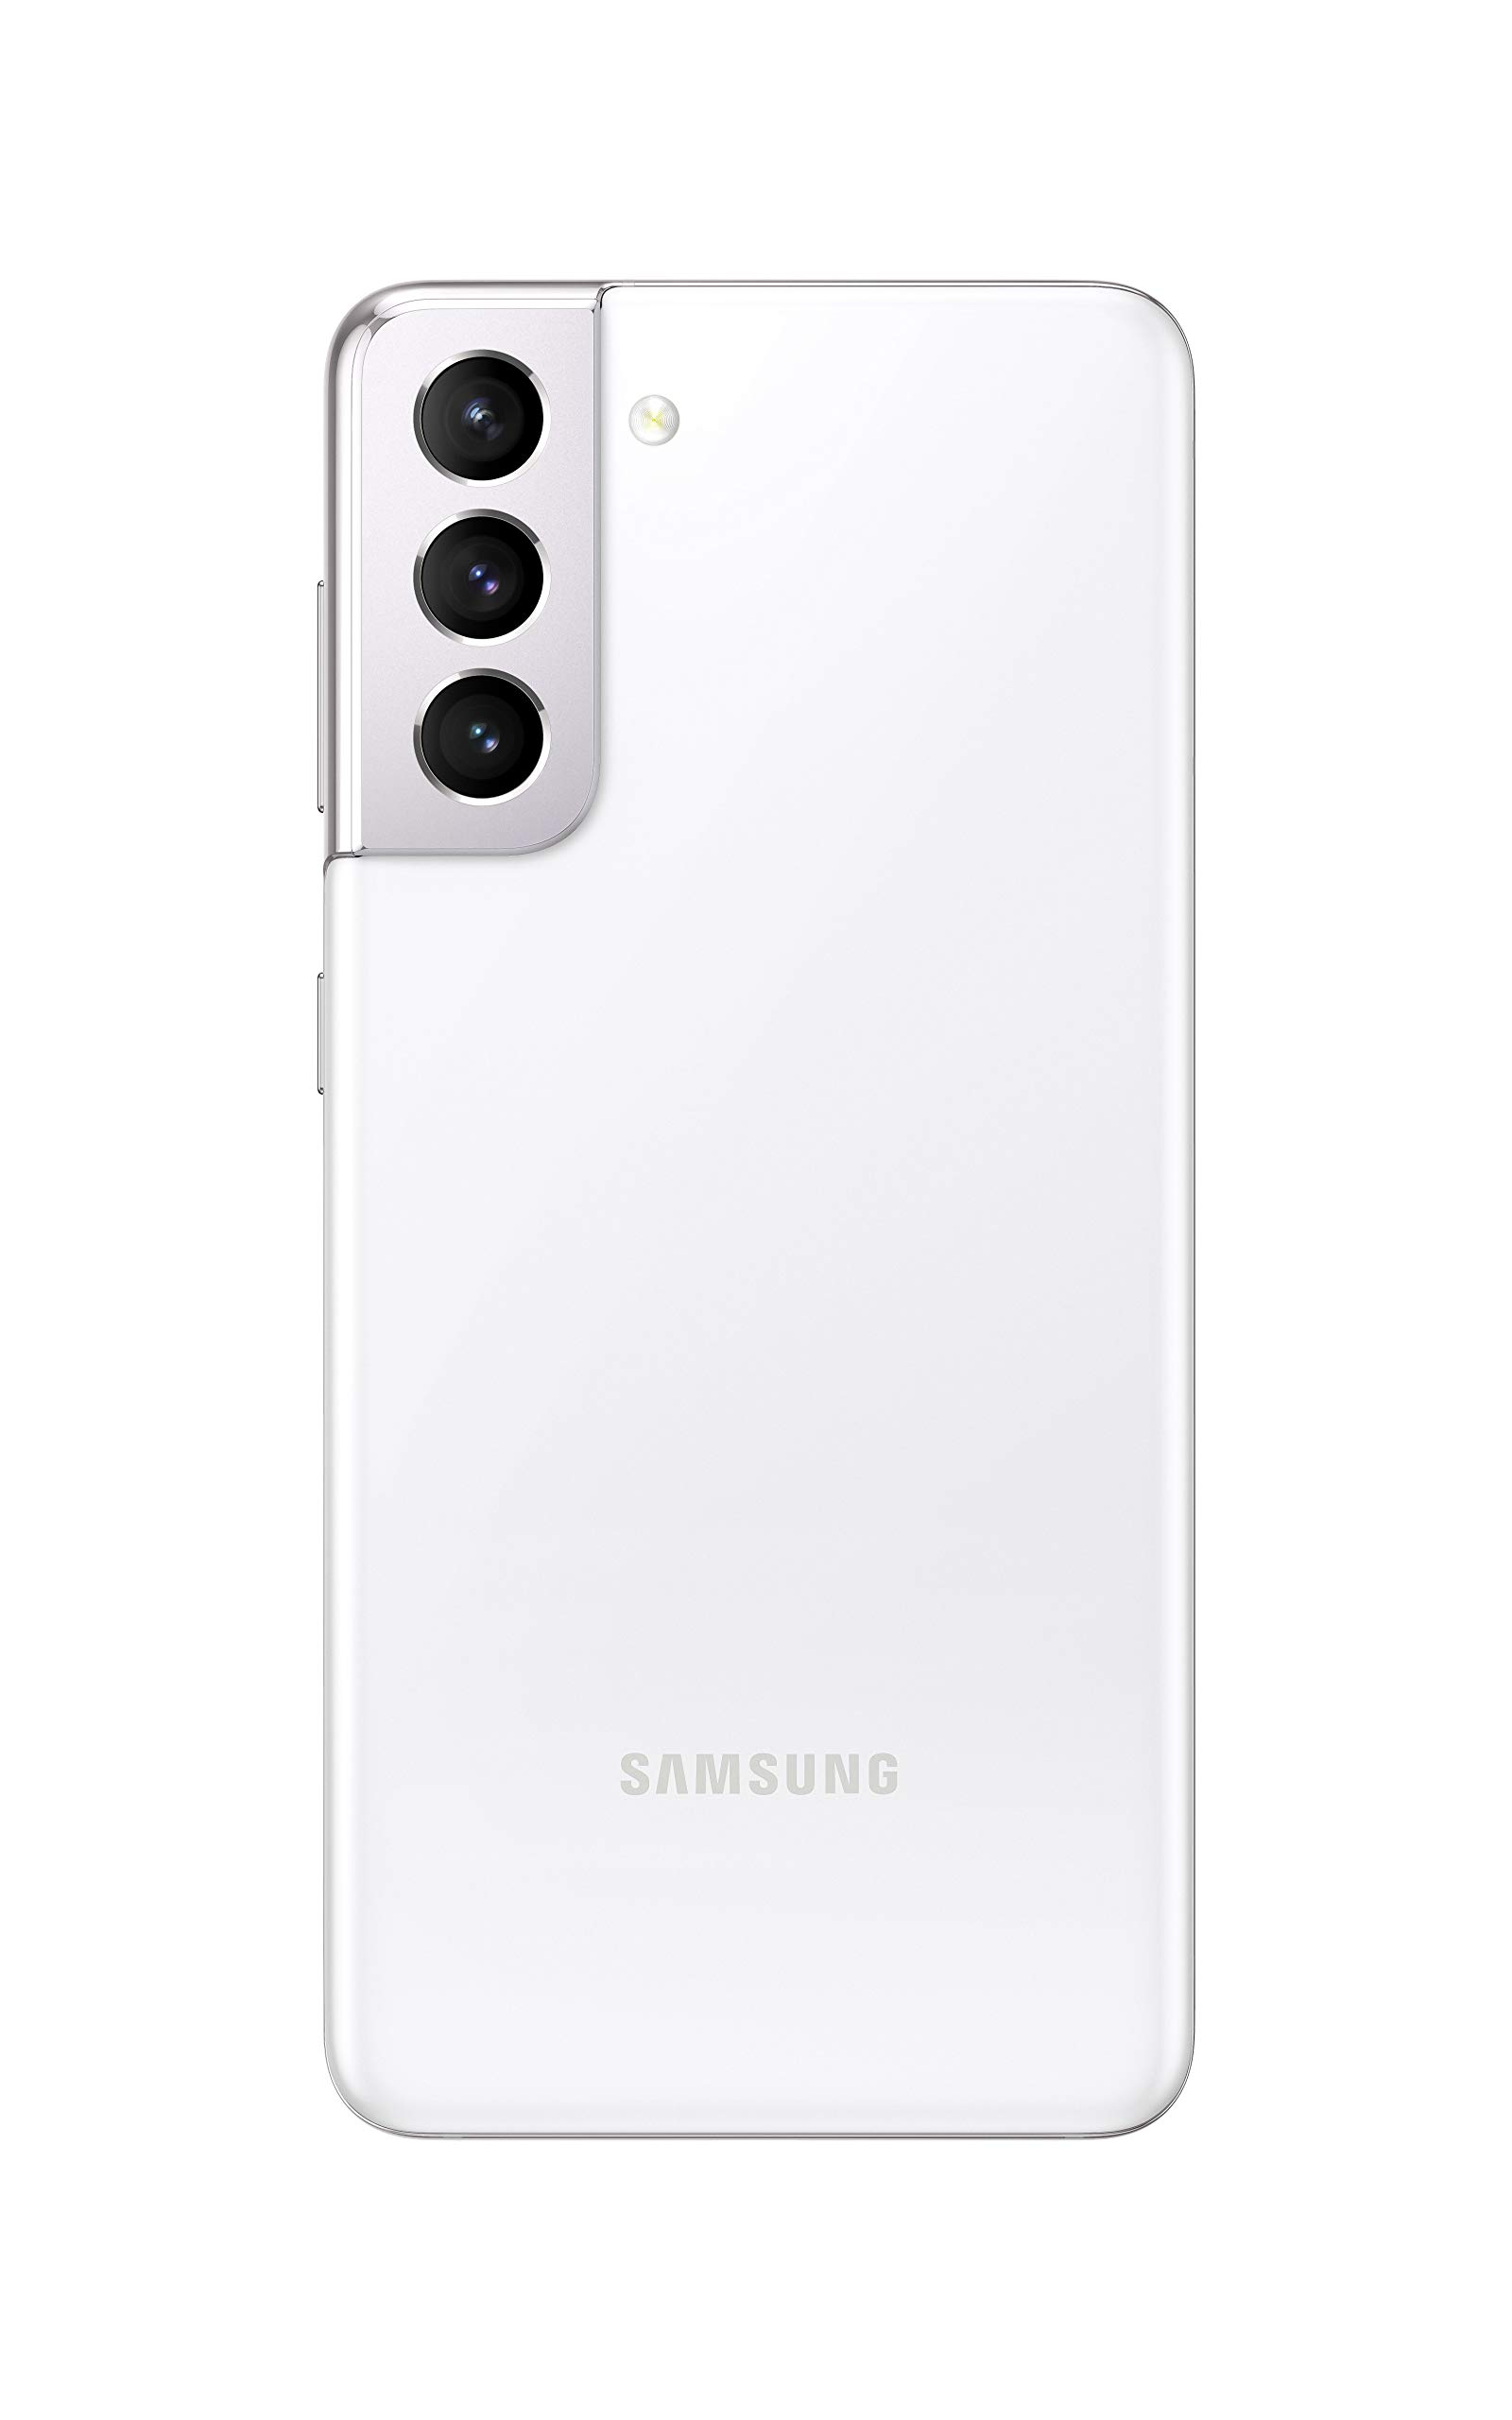 Samsung Galaxy S21 5G | Factory Unlocked Android Cell Phone | US Version 5G Smartphone | Pro-Grade Camera, 8K Video, 64MP High Res | 128GB, Phantom White (SM-G991UZWAXAA)